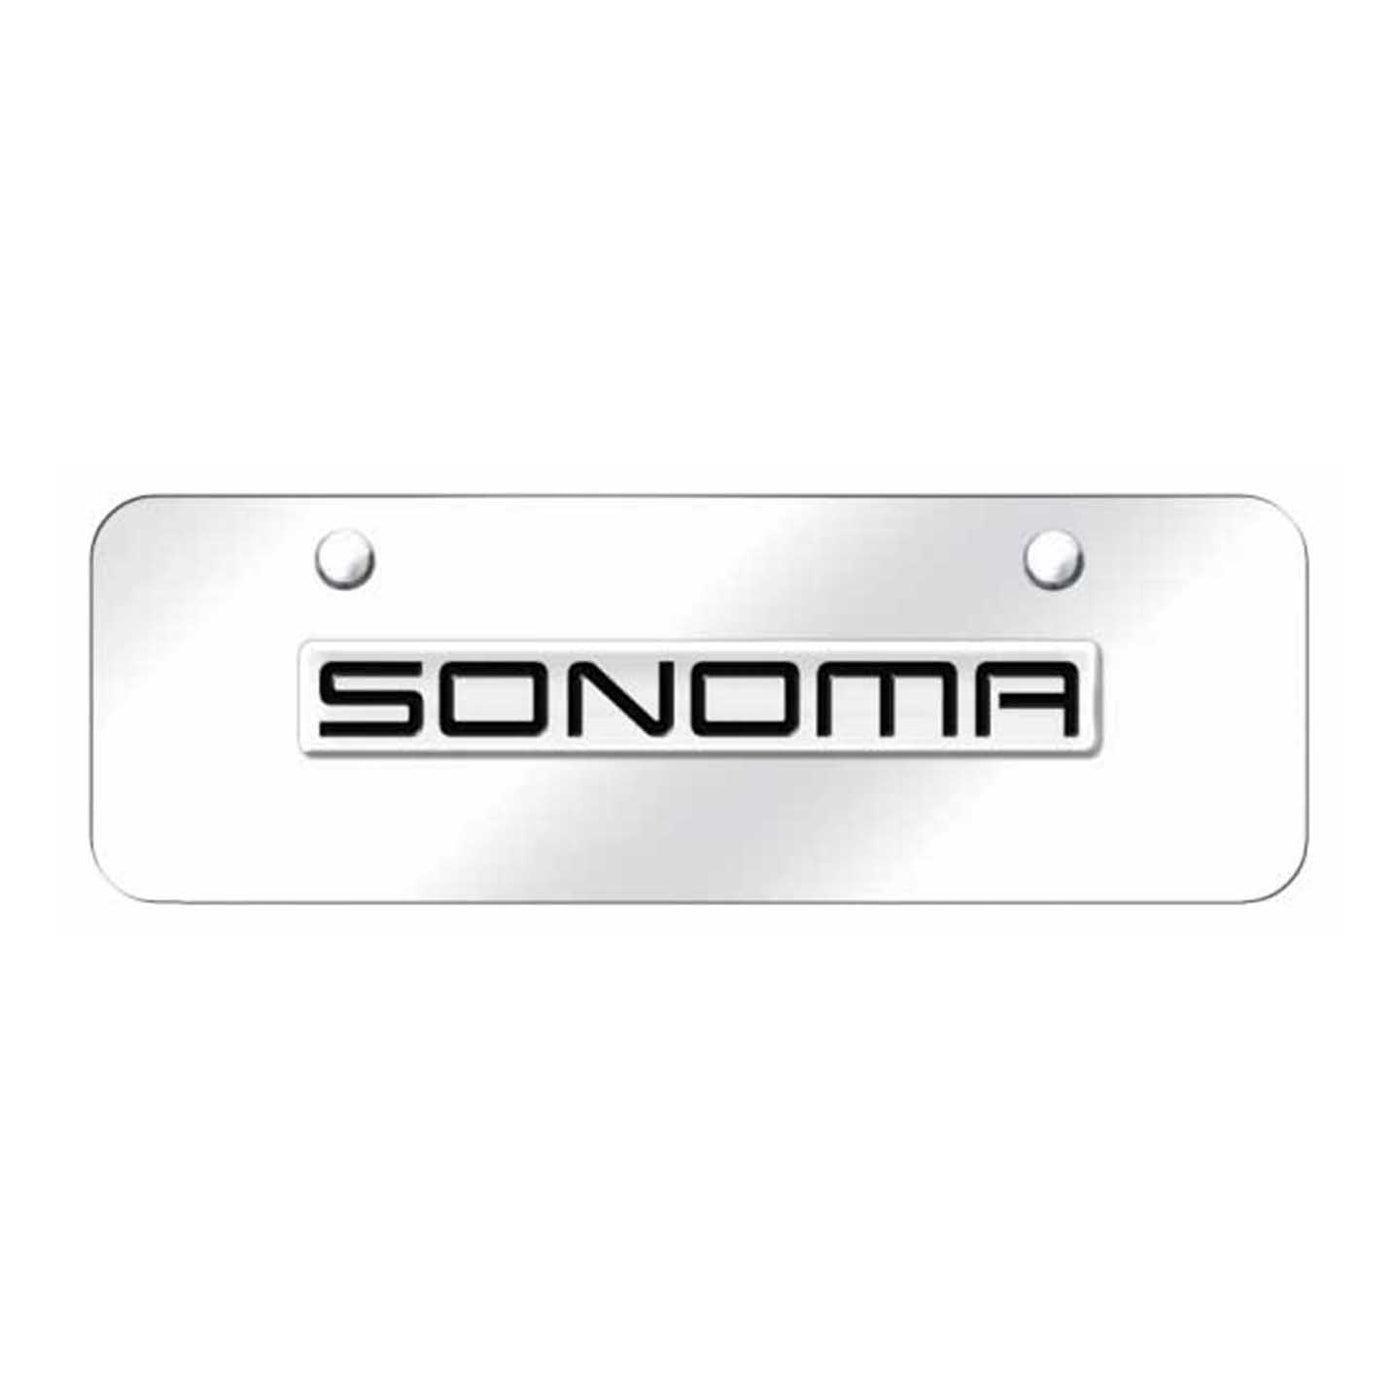 Sonoma Name Mini Plate - Chrome on Mirrored